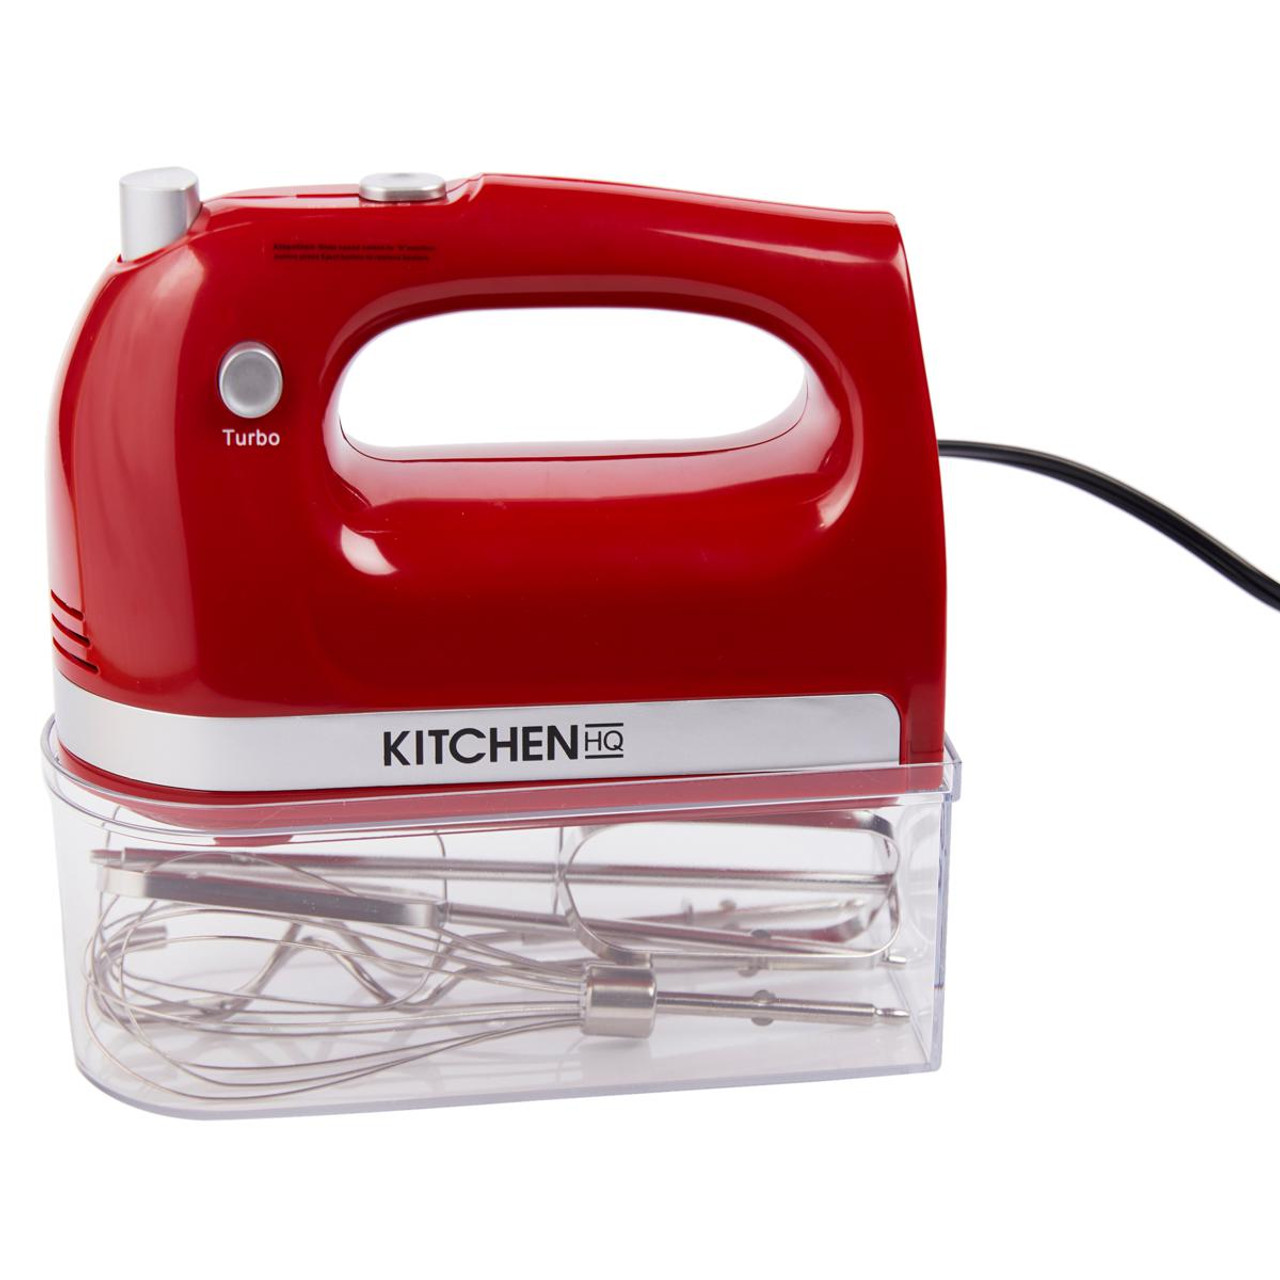 Kitchen HQ 5-Speed Electric Hand Mixer with Storage Case